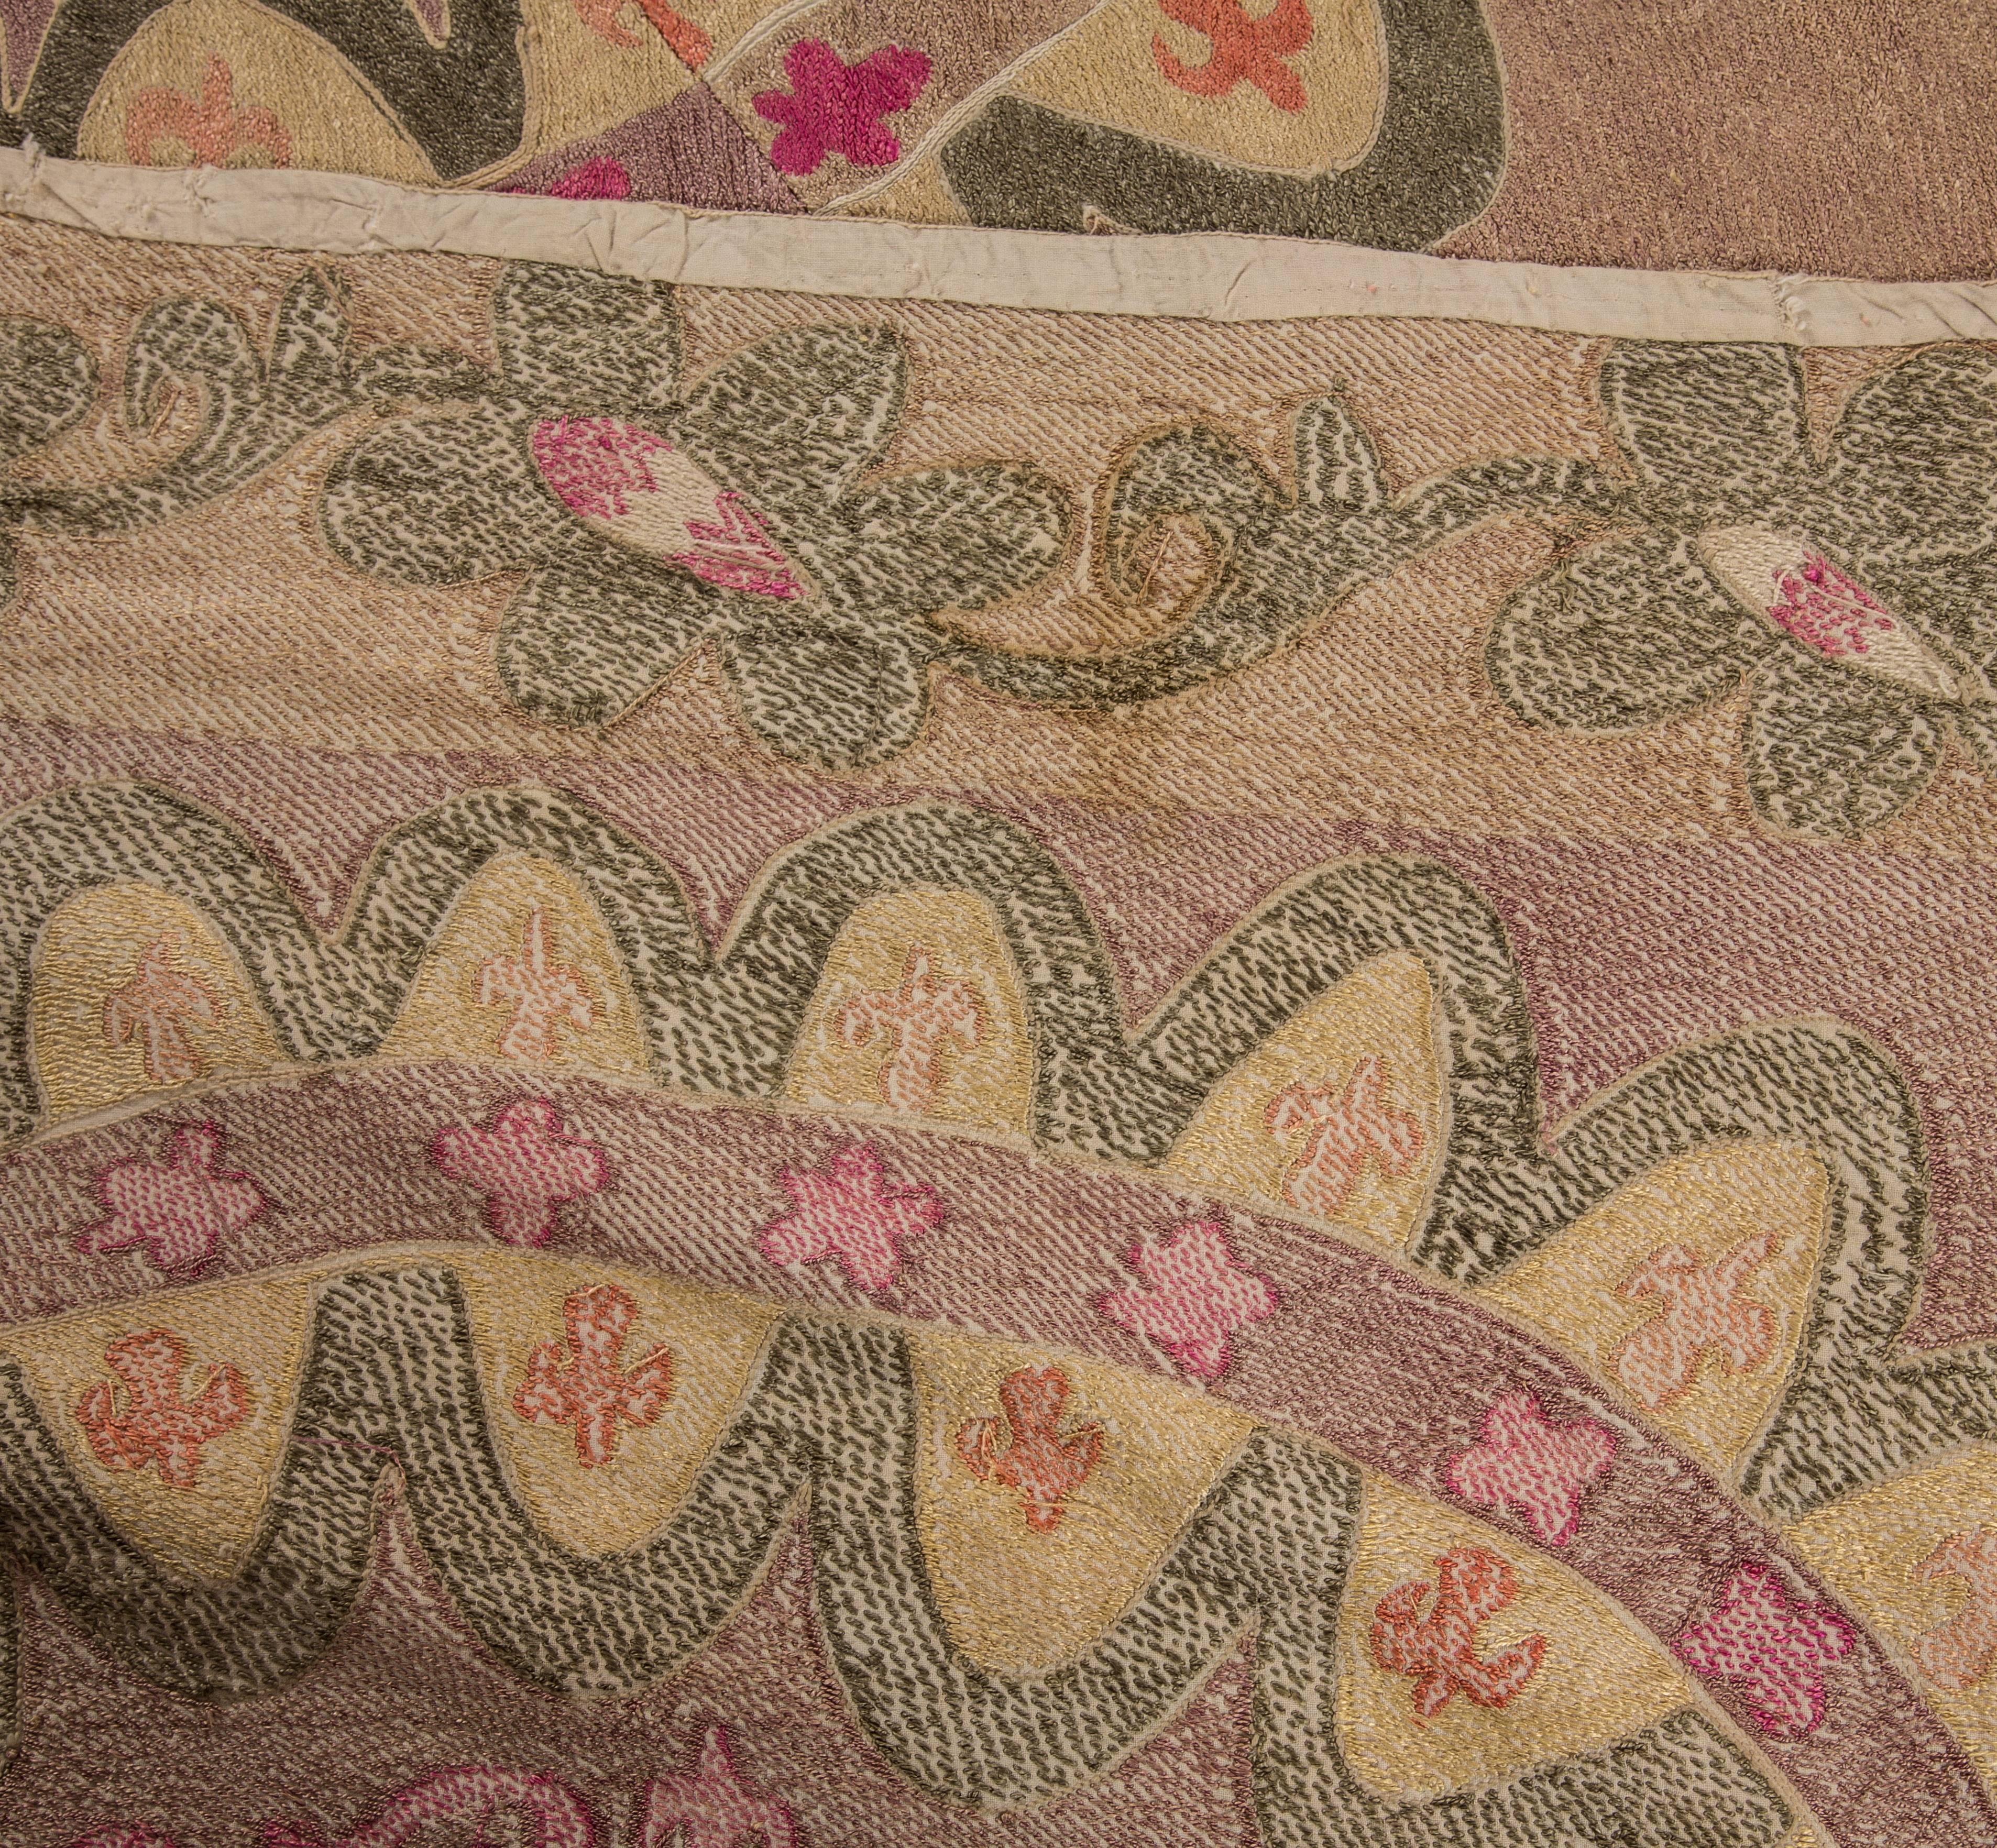 Early 20th Century Uzbek Pishkent All-Over Embroidered Suzani 5